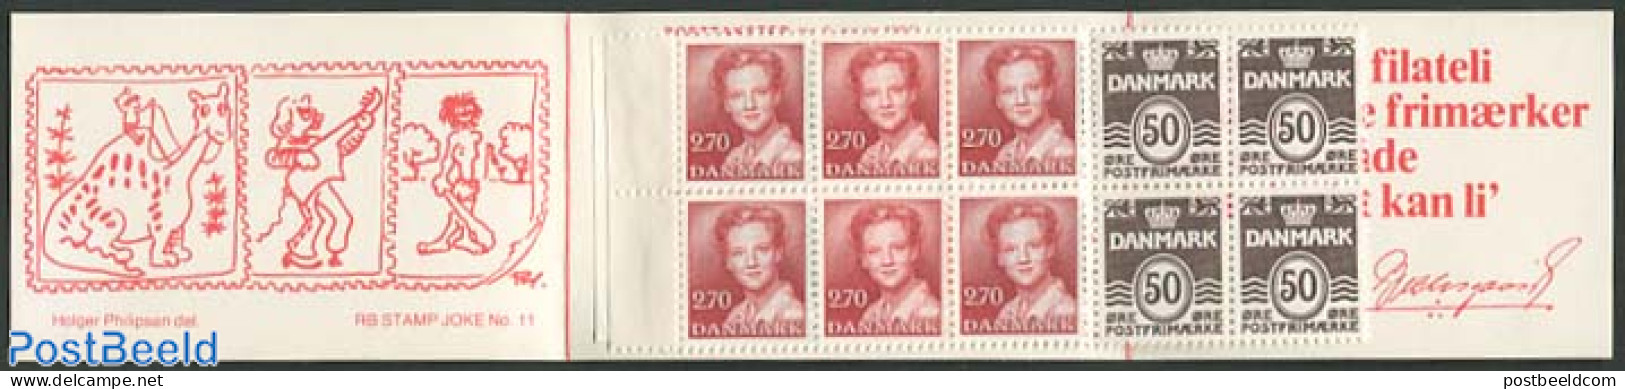 Denmark 1984 Definitives Booklet (H26 On Cover), Mint NH, Stamp Booklets - Unused Stamps